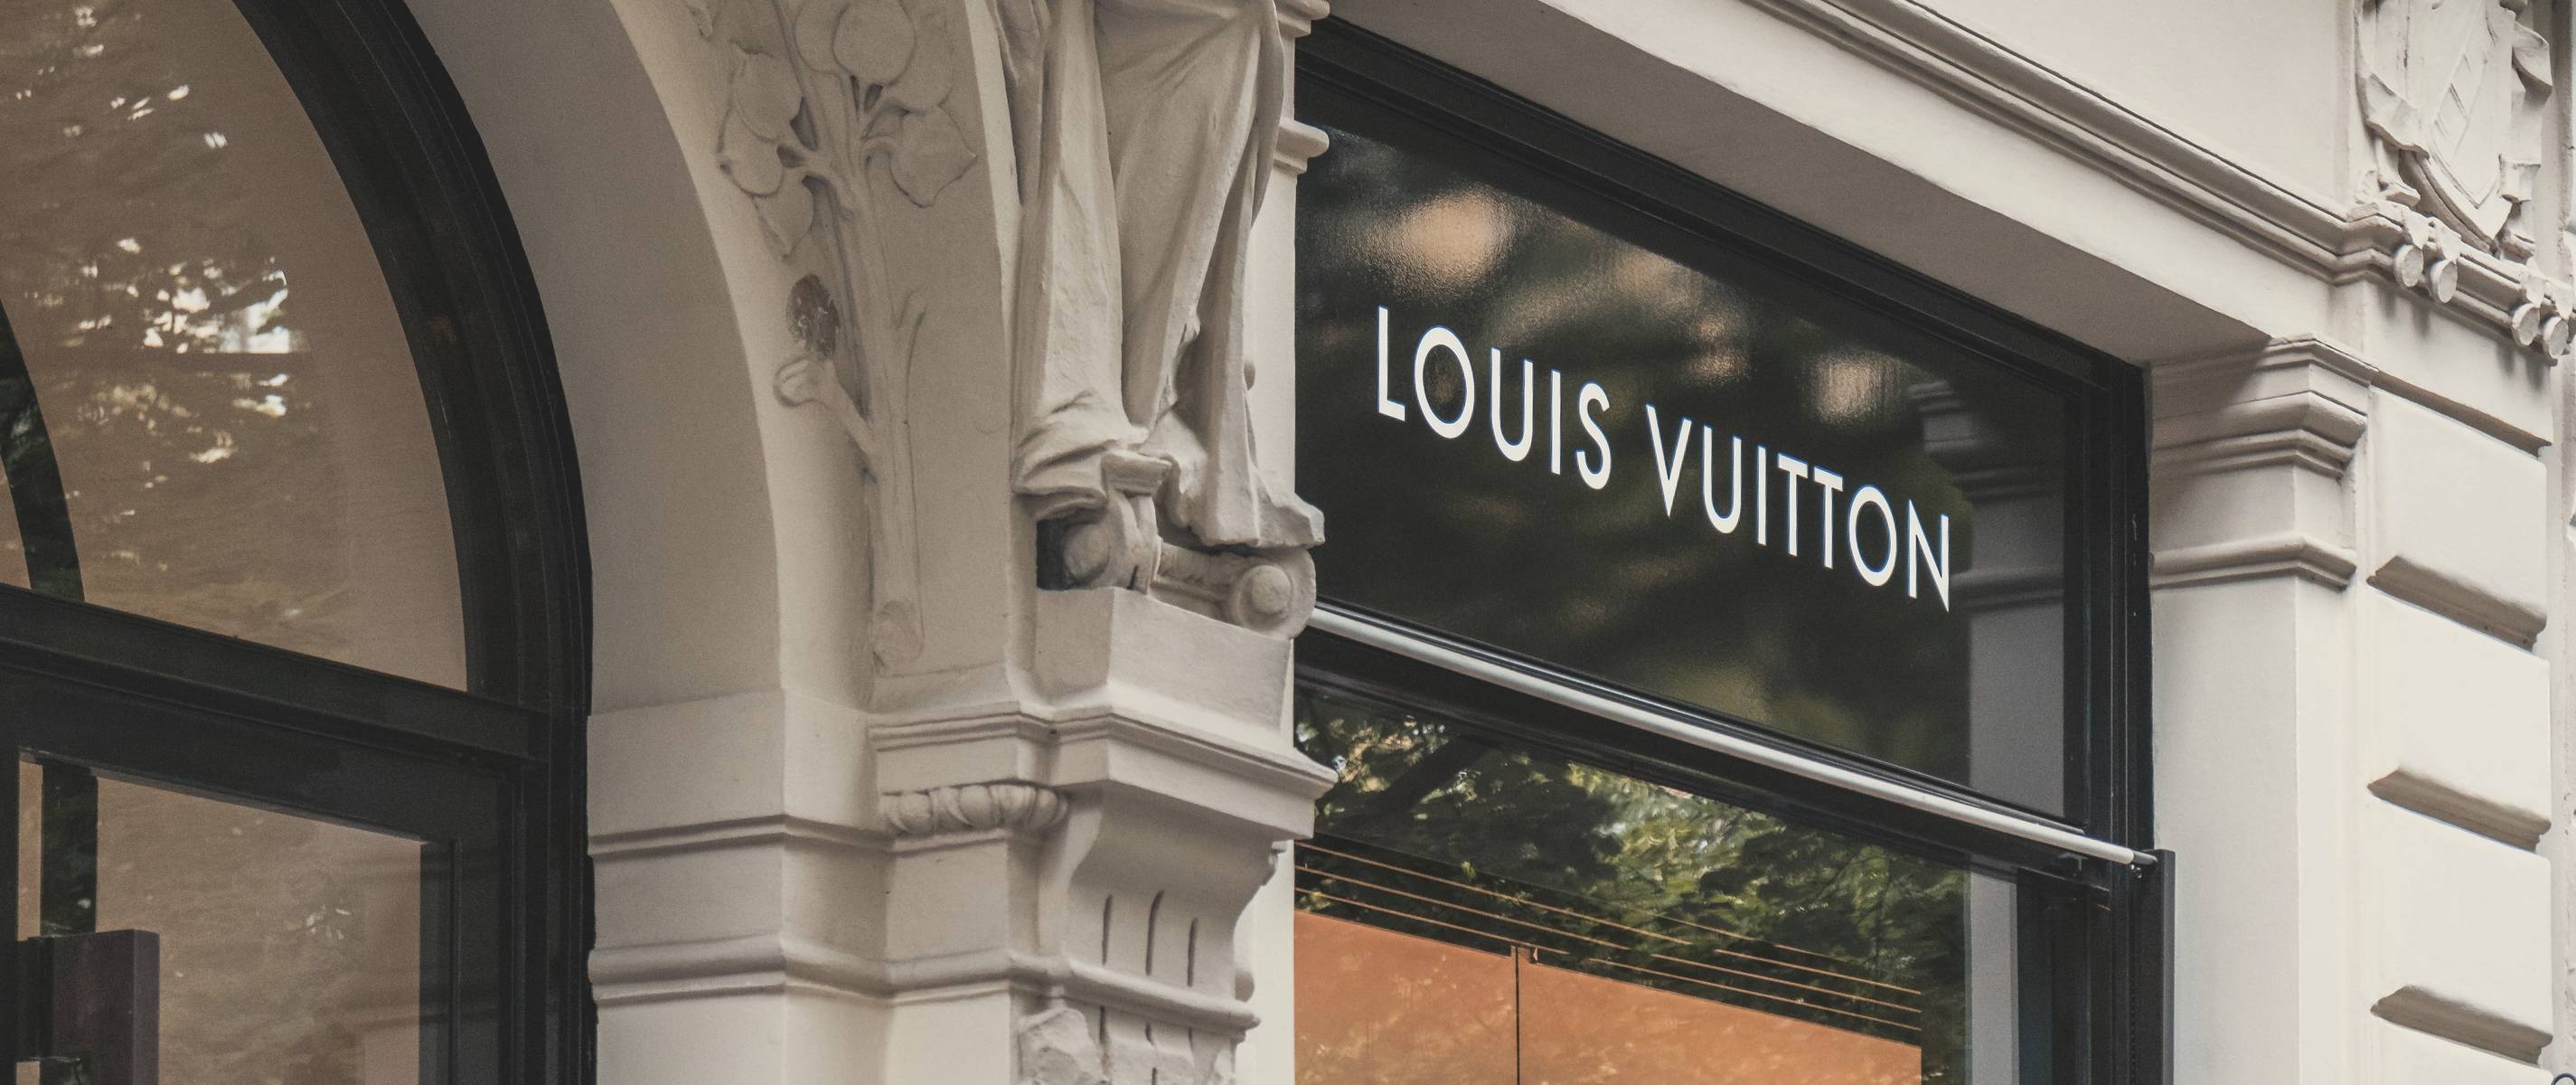 Scialle Louis Vuitton  Natural Resource Department